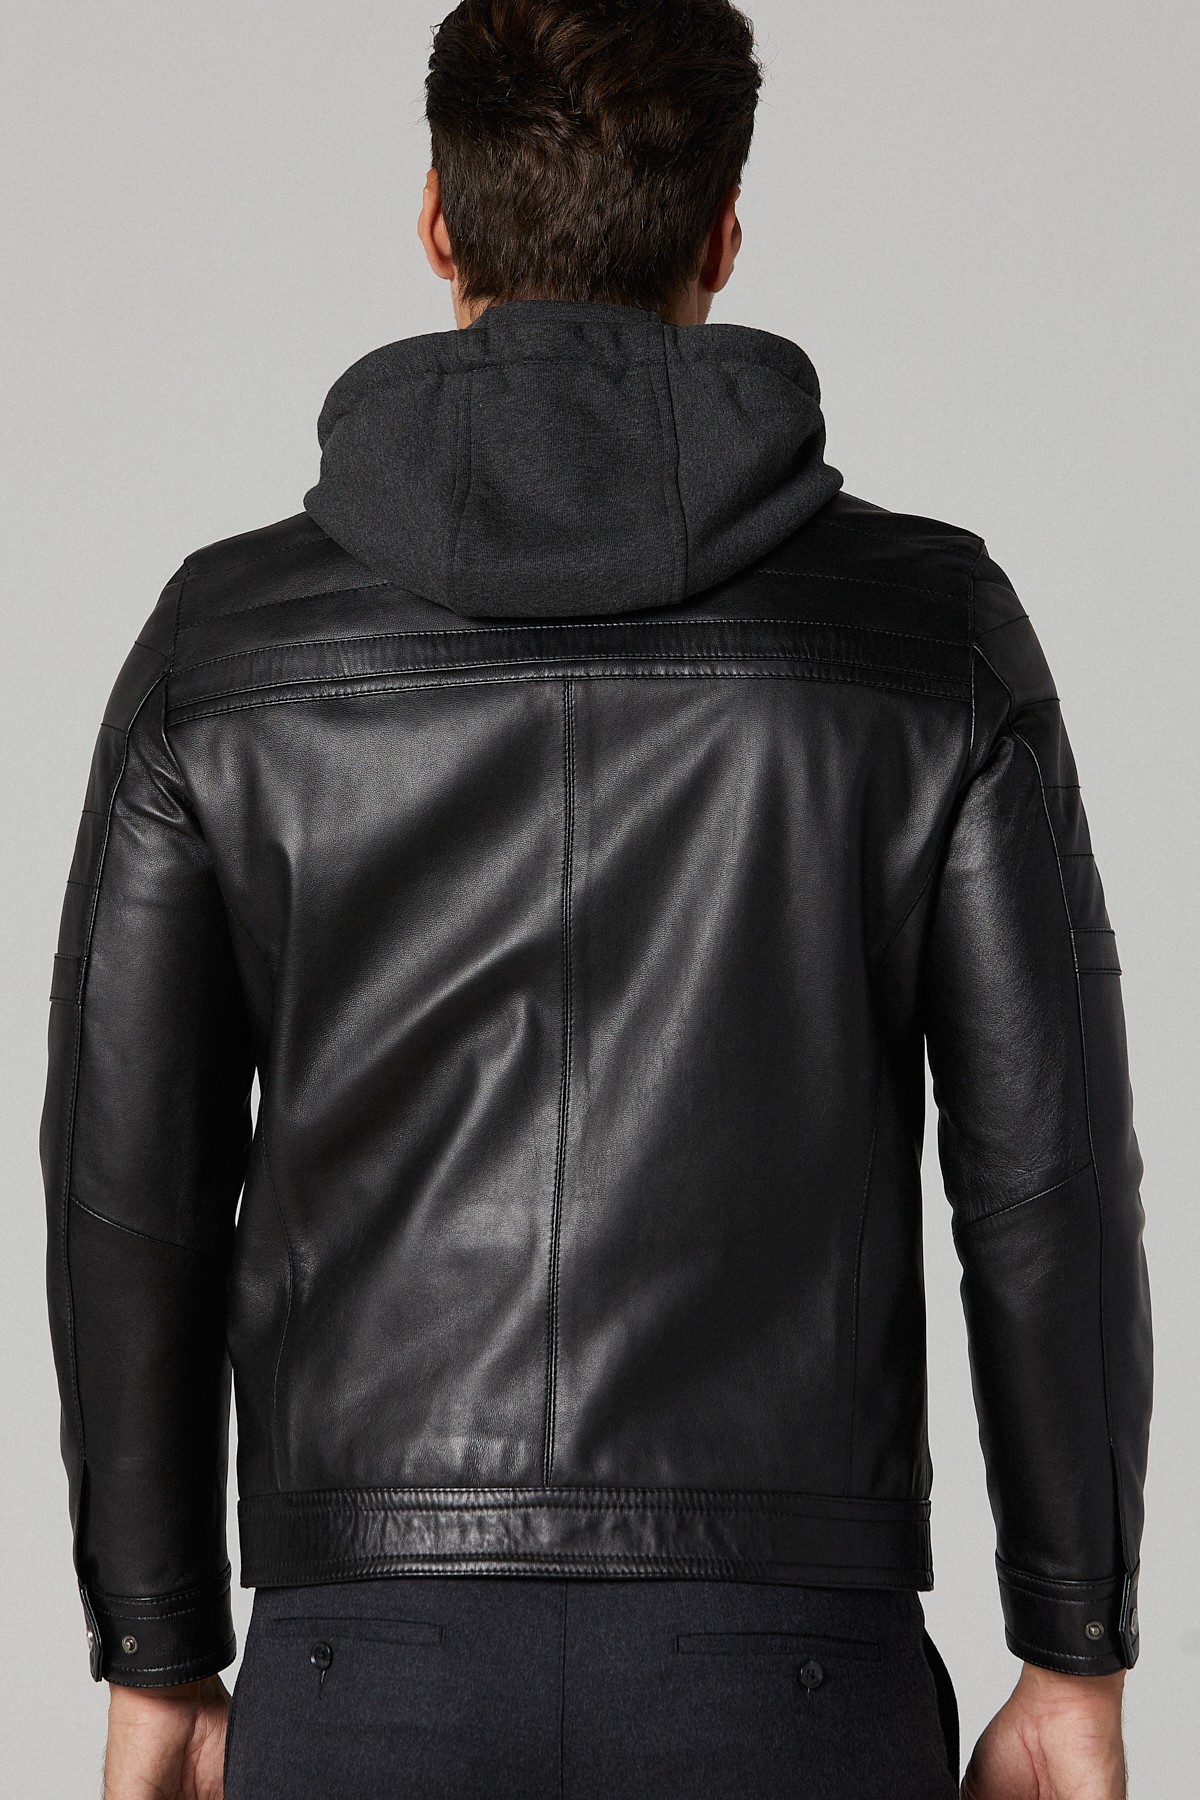 Gents Hoody Leather Jacket | Hooded Fashion Leather Jackets